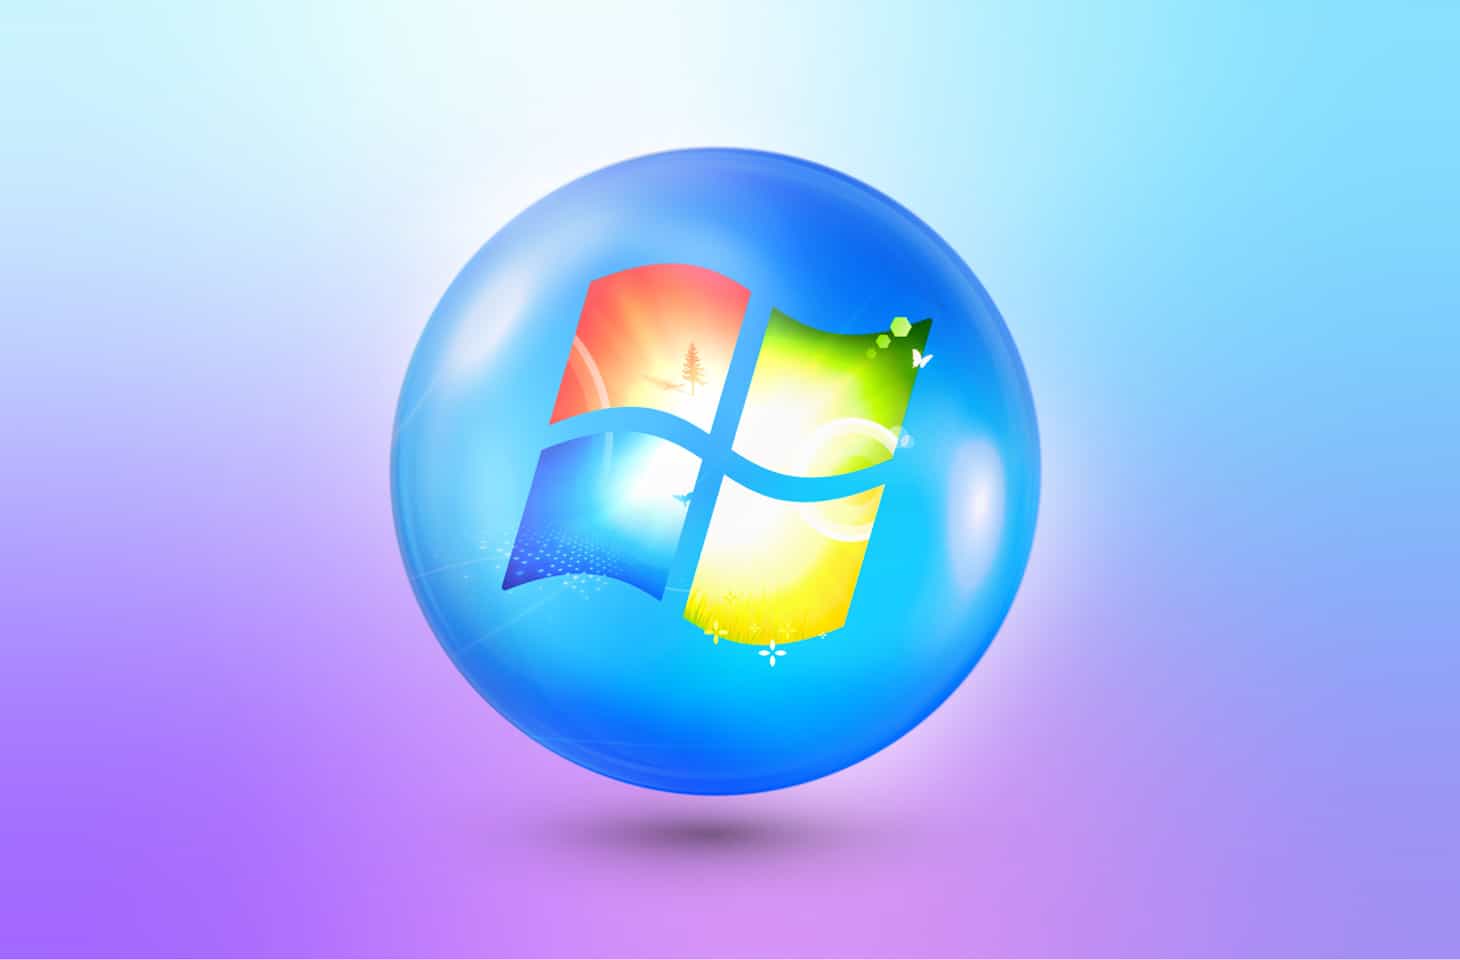 ¿Cómo lidiar con un Windows 7 bloqueado? ¿Desbloquearlo? - 3 - agosto 27, 2021